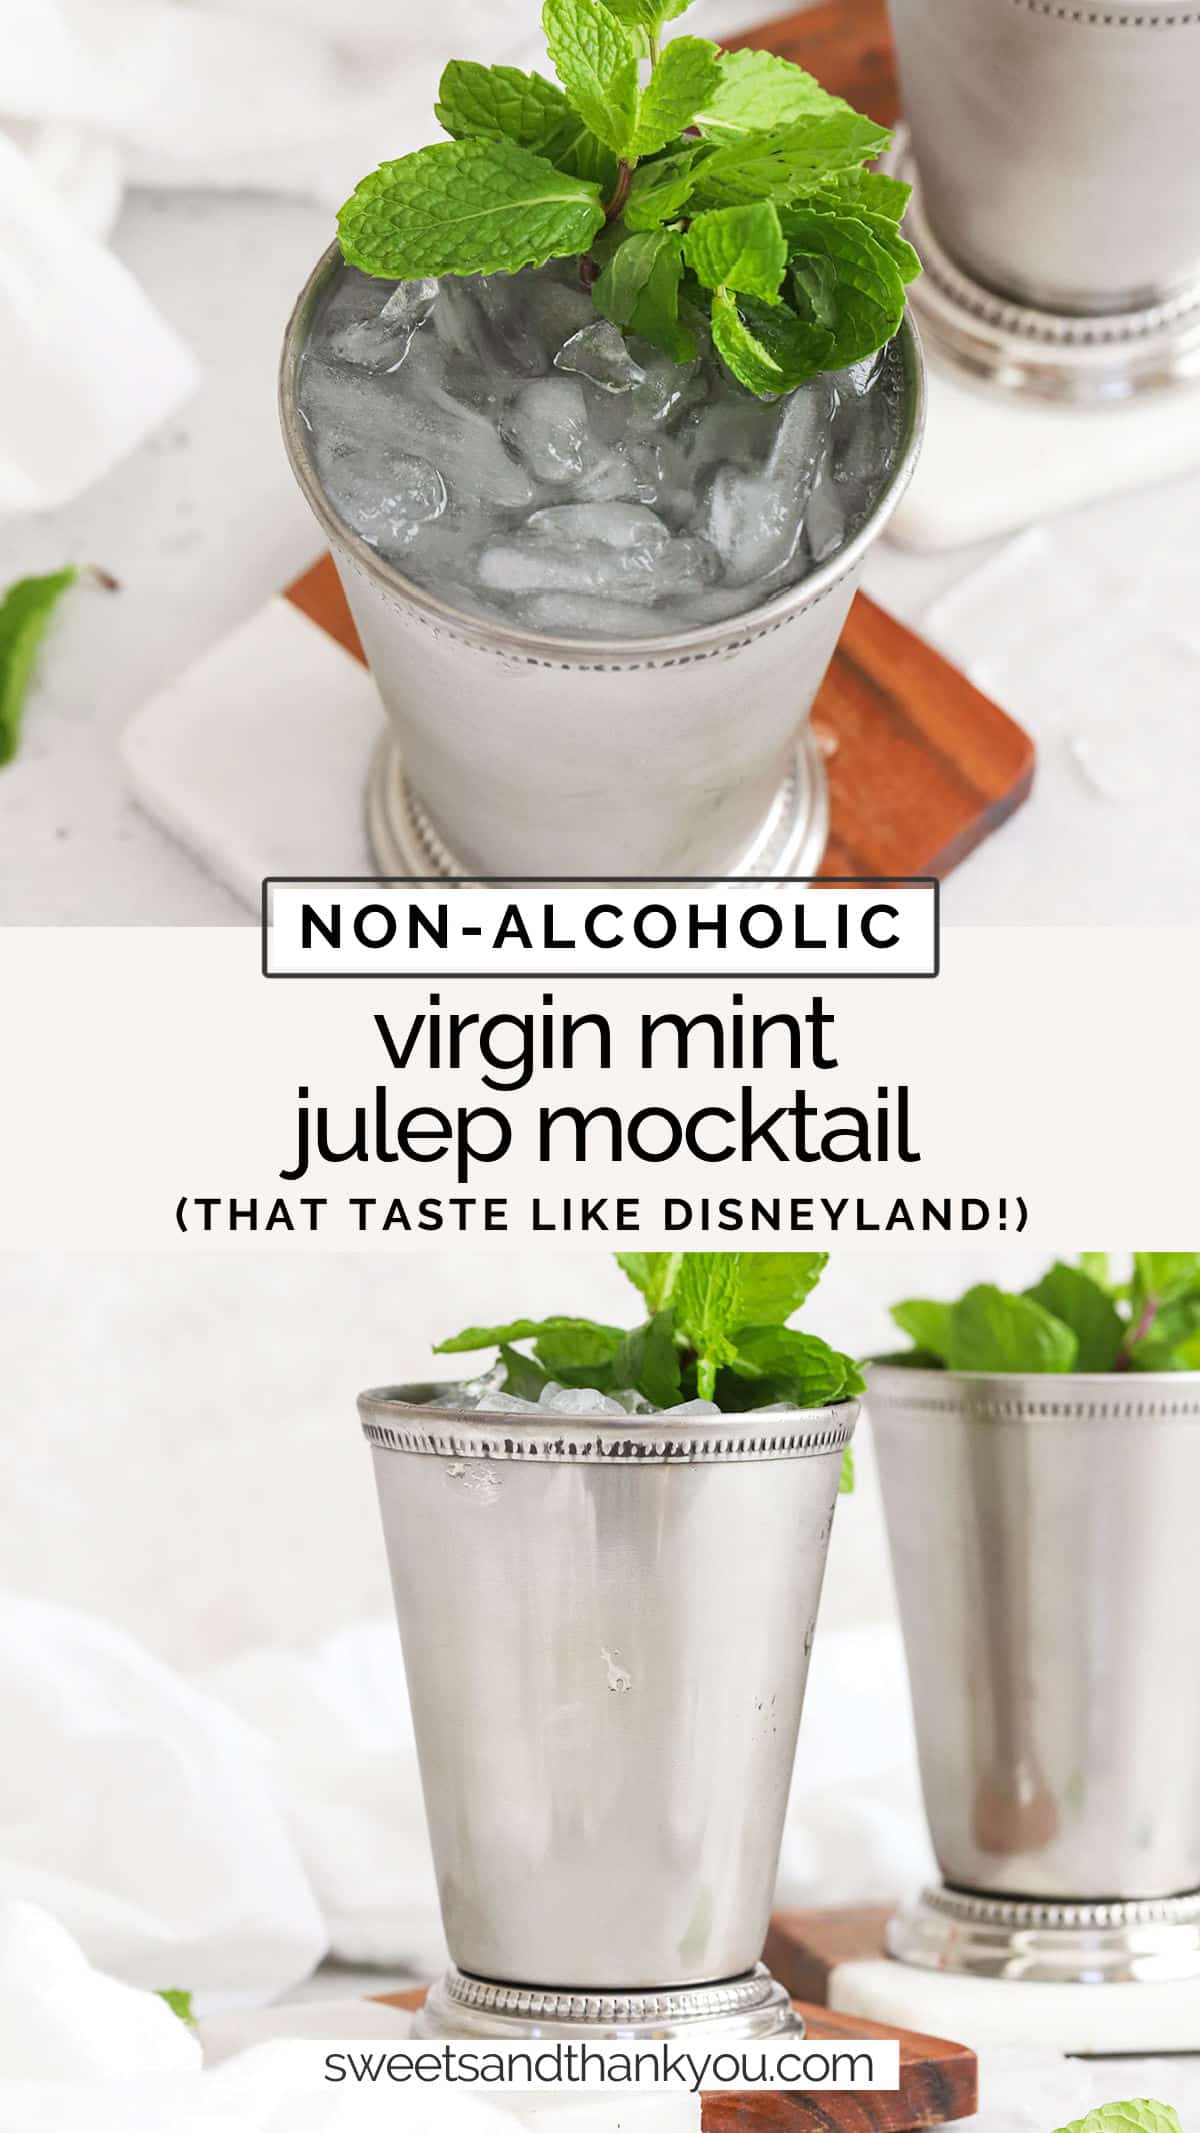 Craving a virgin mint julep for Derby day? We've got you covered with our easy Disneyland mint julep mocktail recipe! / disneyland copycat mint julep / disneyland mint julep recipe / virgin mint julep recipe / mint julep mocktail recipe / non-alcoholic mint julep recipe / kid friendly mint julep / summer mocktail / mint mocktail / 